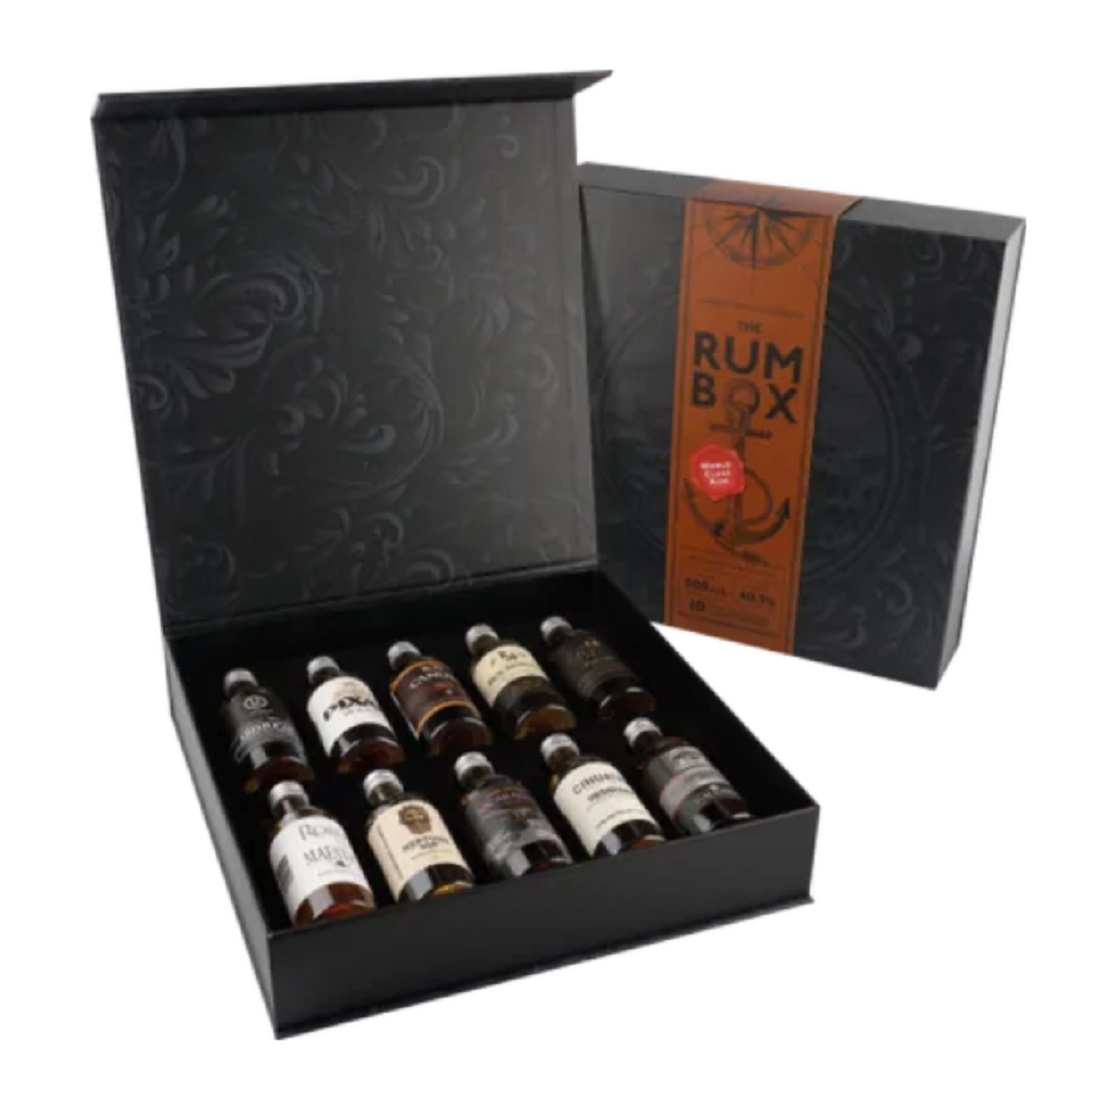 GB Red Edition Rum 40,9% 10×0,05l Box